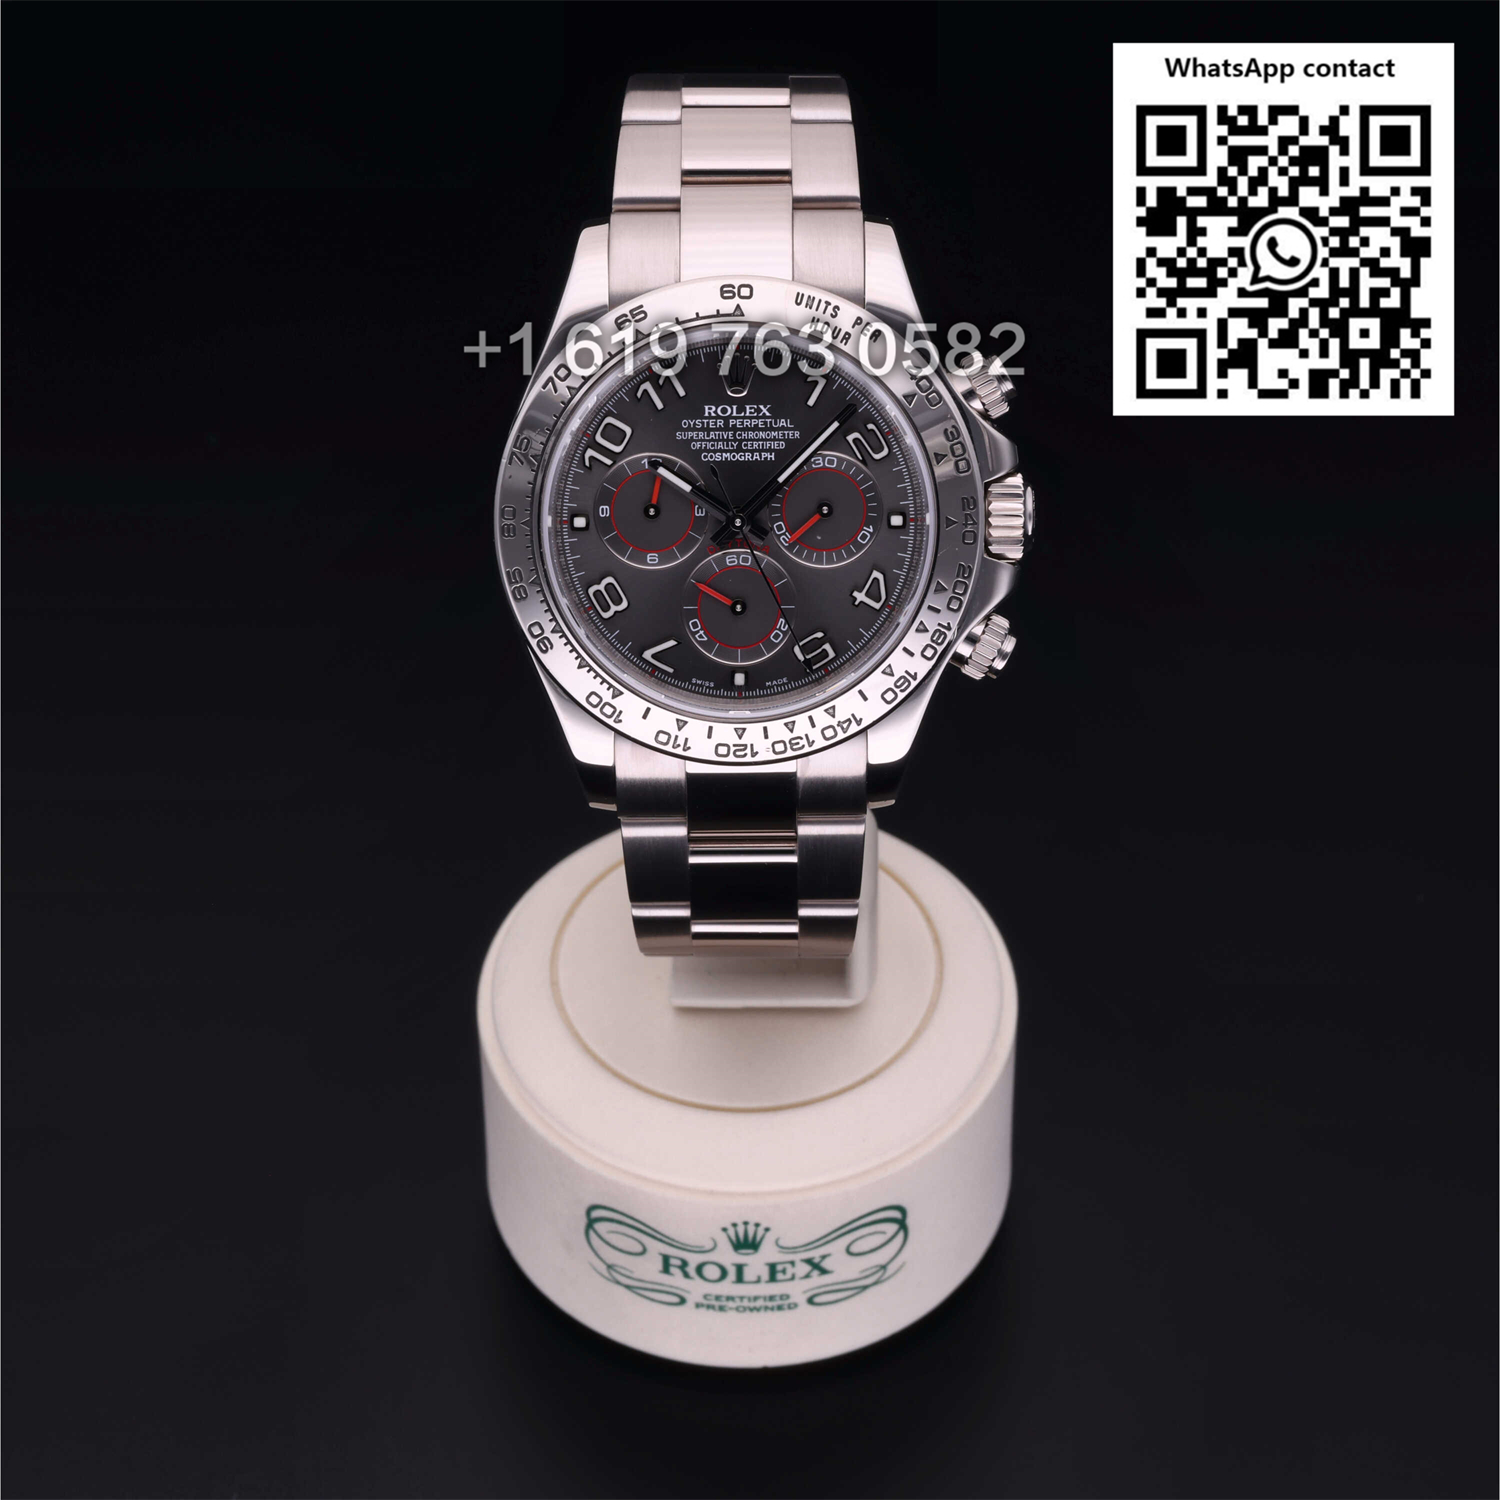 Rolex Daytona White Gold Silver Dial Mens Watch 116509 Swiss Super Clone 4130